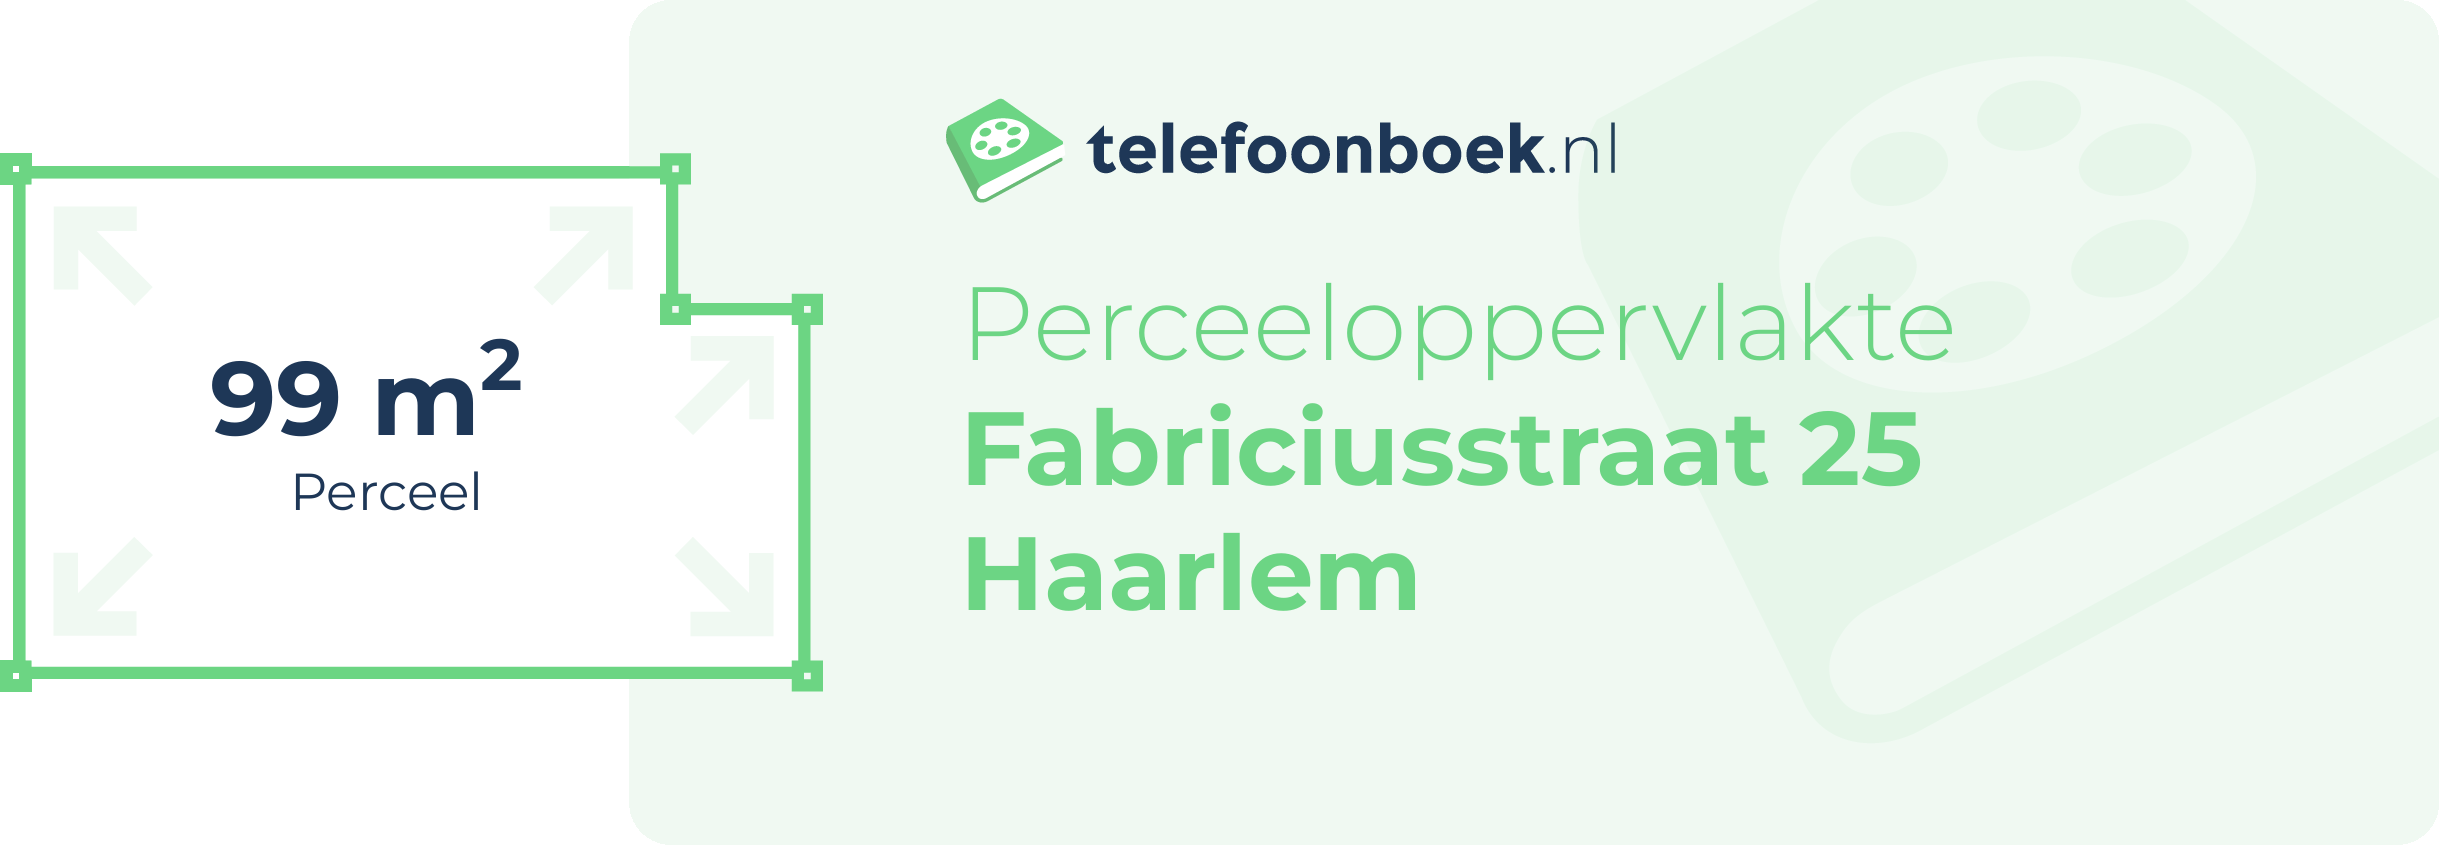 Perceeloppervlakte Fabriciusstraat 25 Haarlem